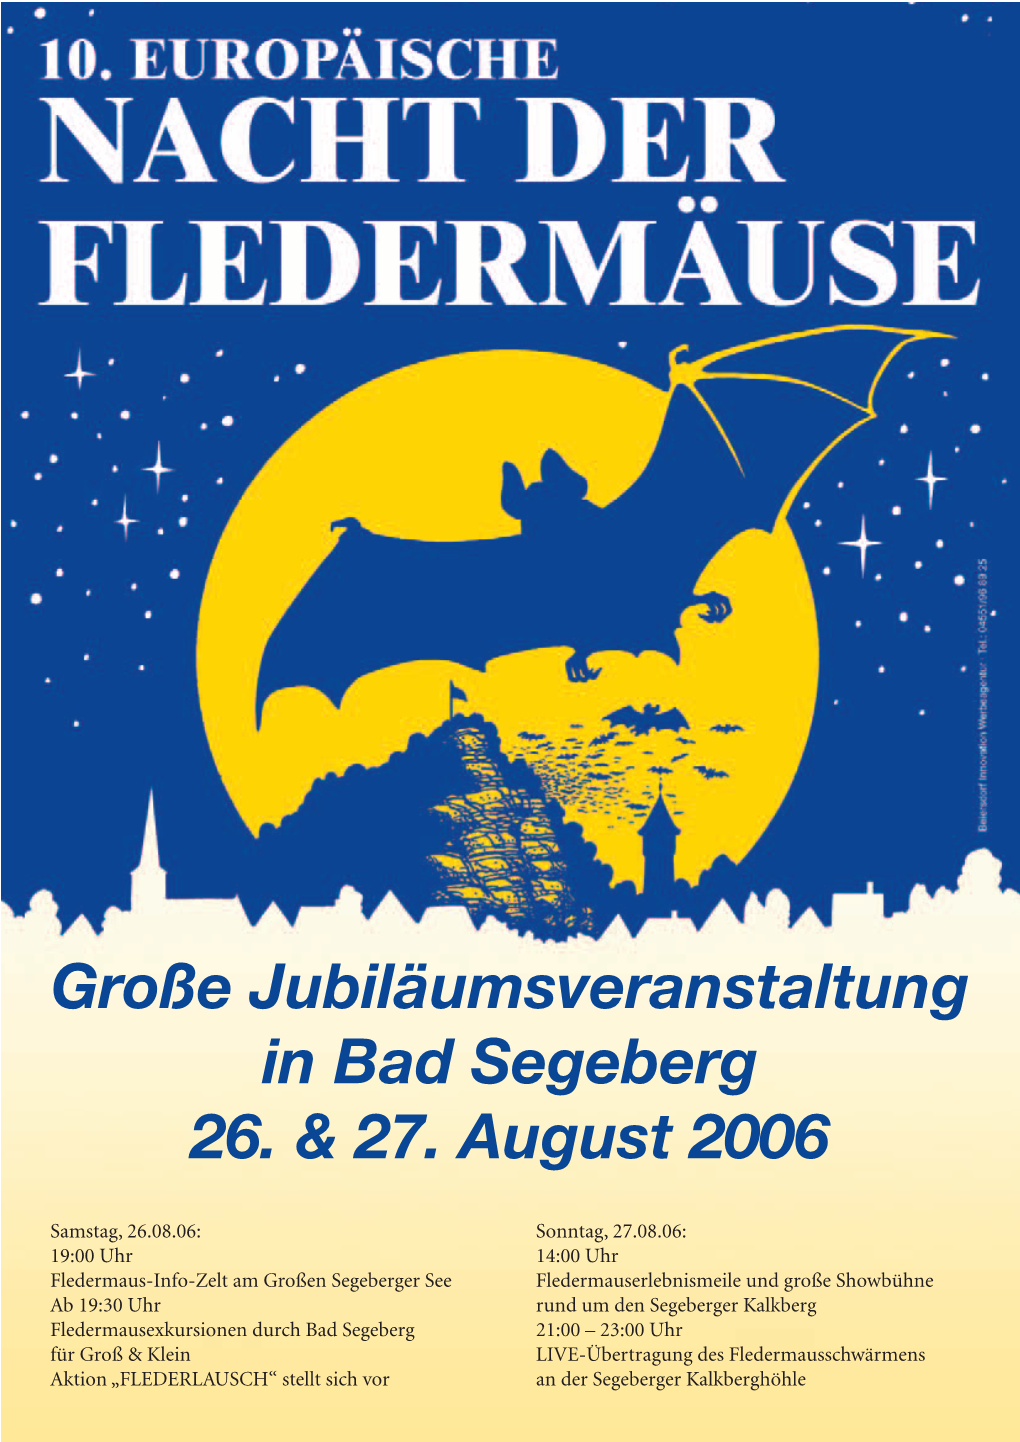 Große Jubiläumsveranstaltung in Bad Segeberg 26. & 27. August 2006